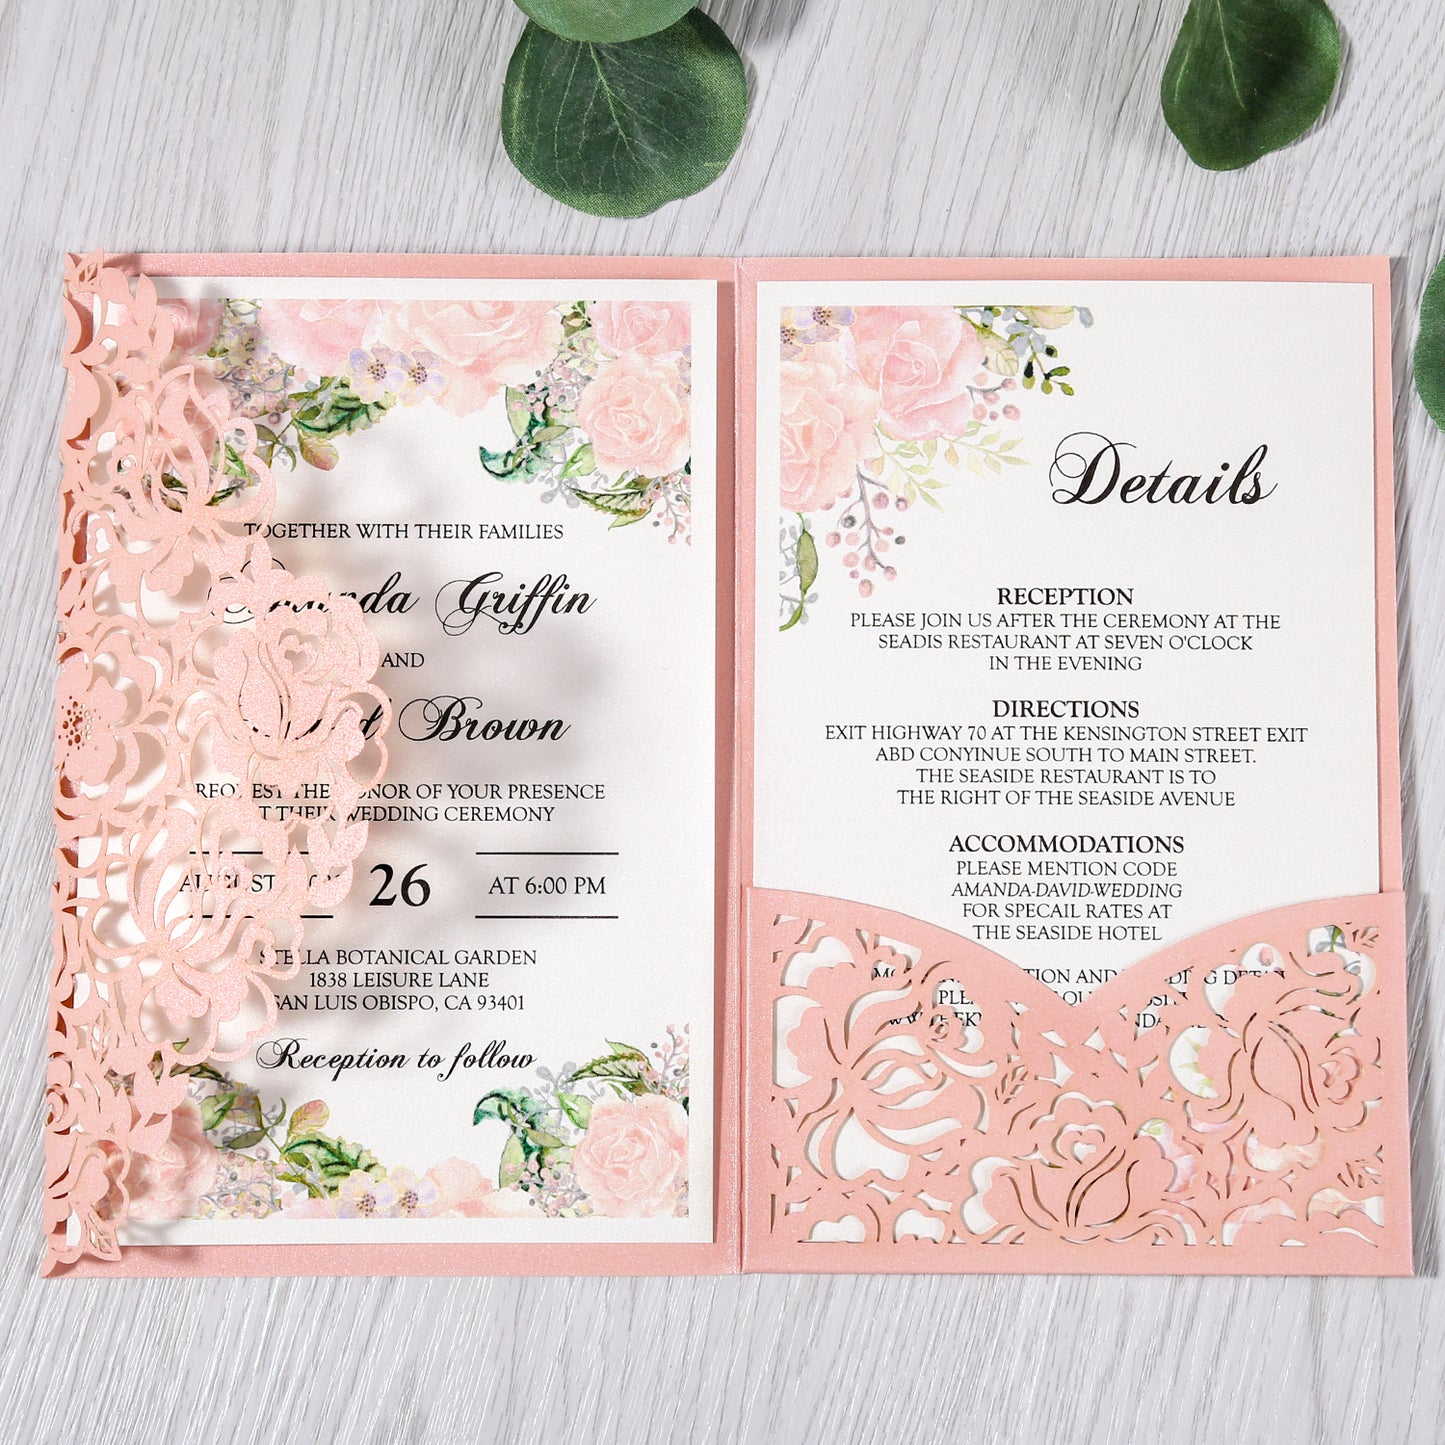 Pink Floral Laser cut invitation cards for Wedding